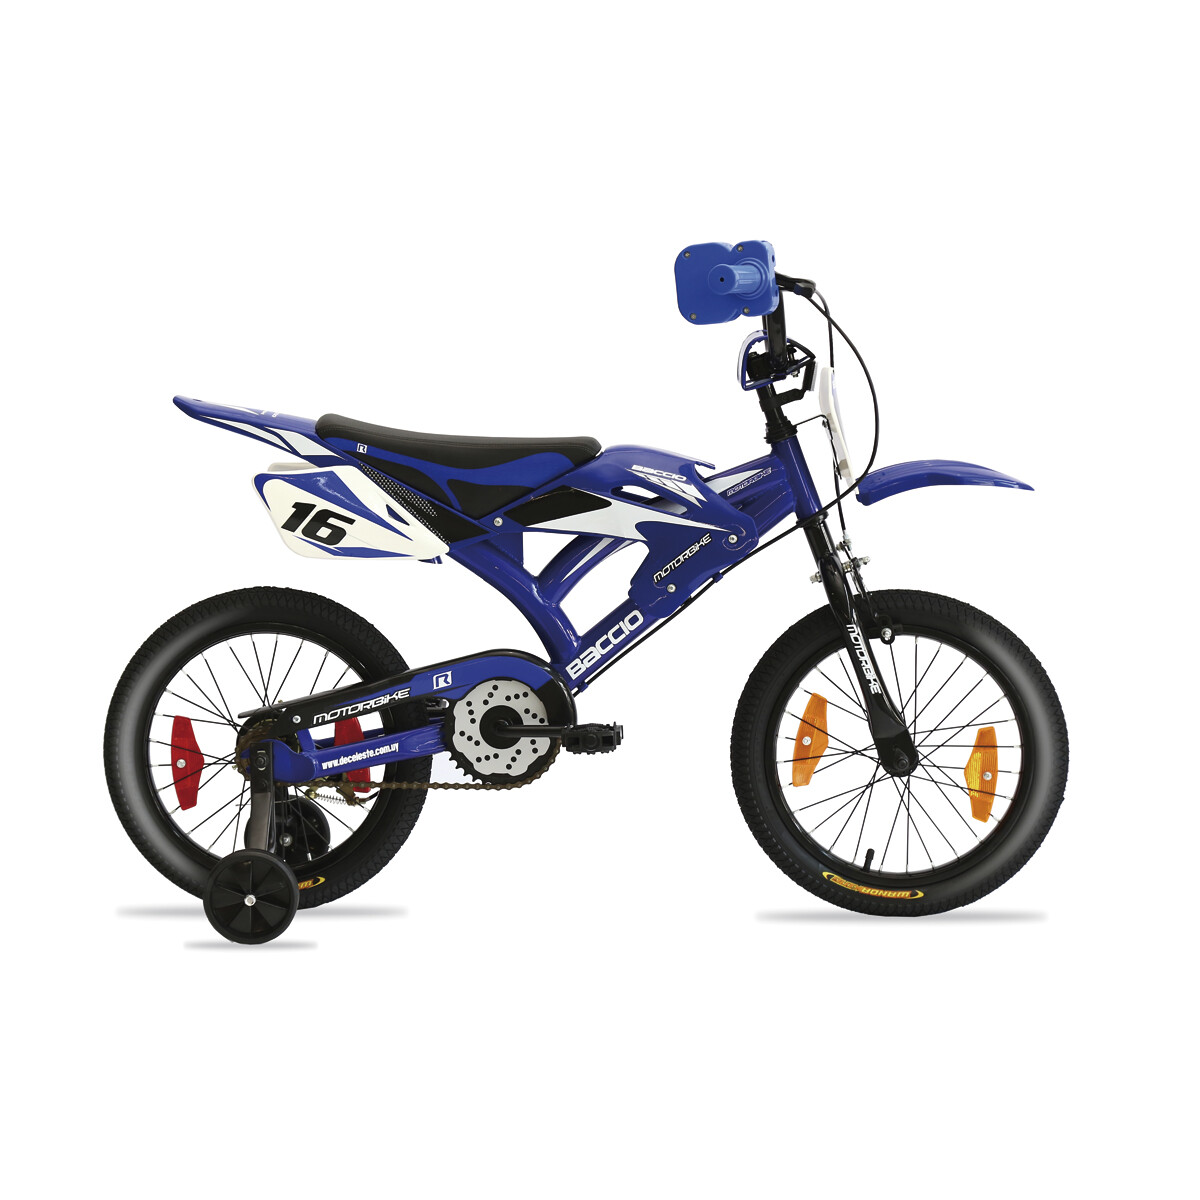 Bicicleta Baccio Motorbike R16 azul 